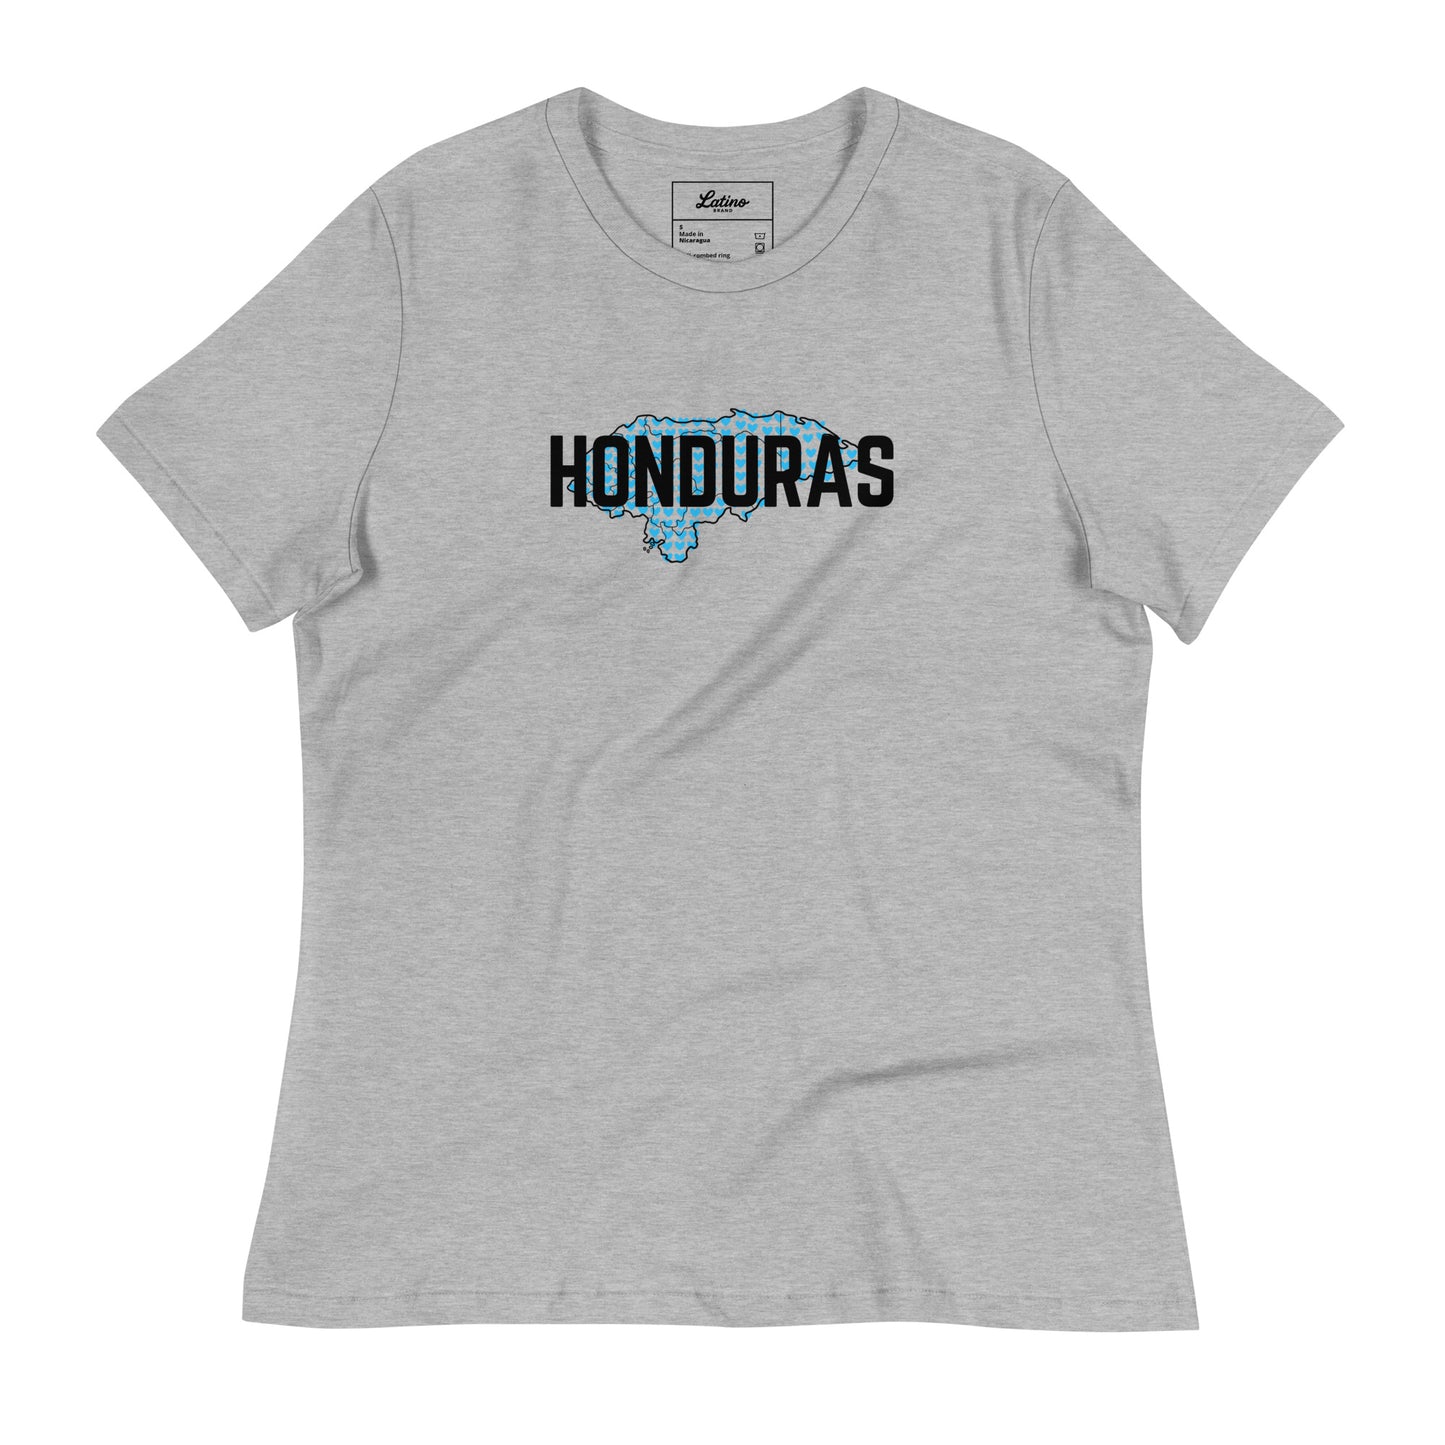 🇭🇳 Amor Honduras (Mujeres)